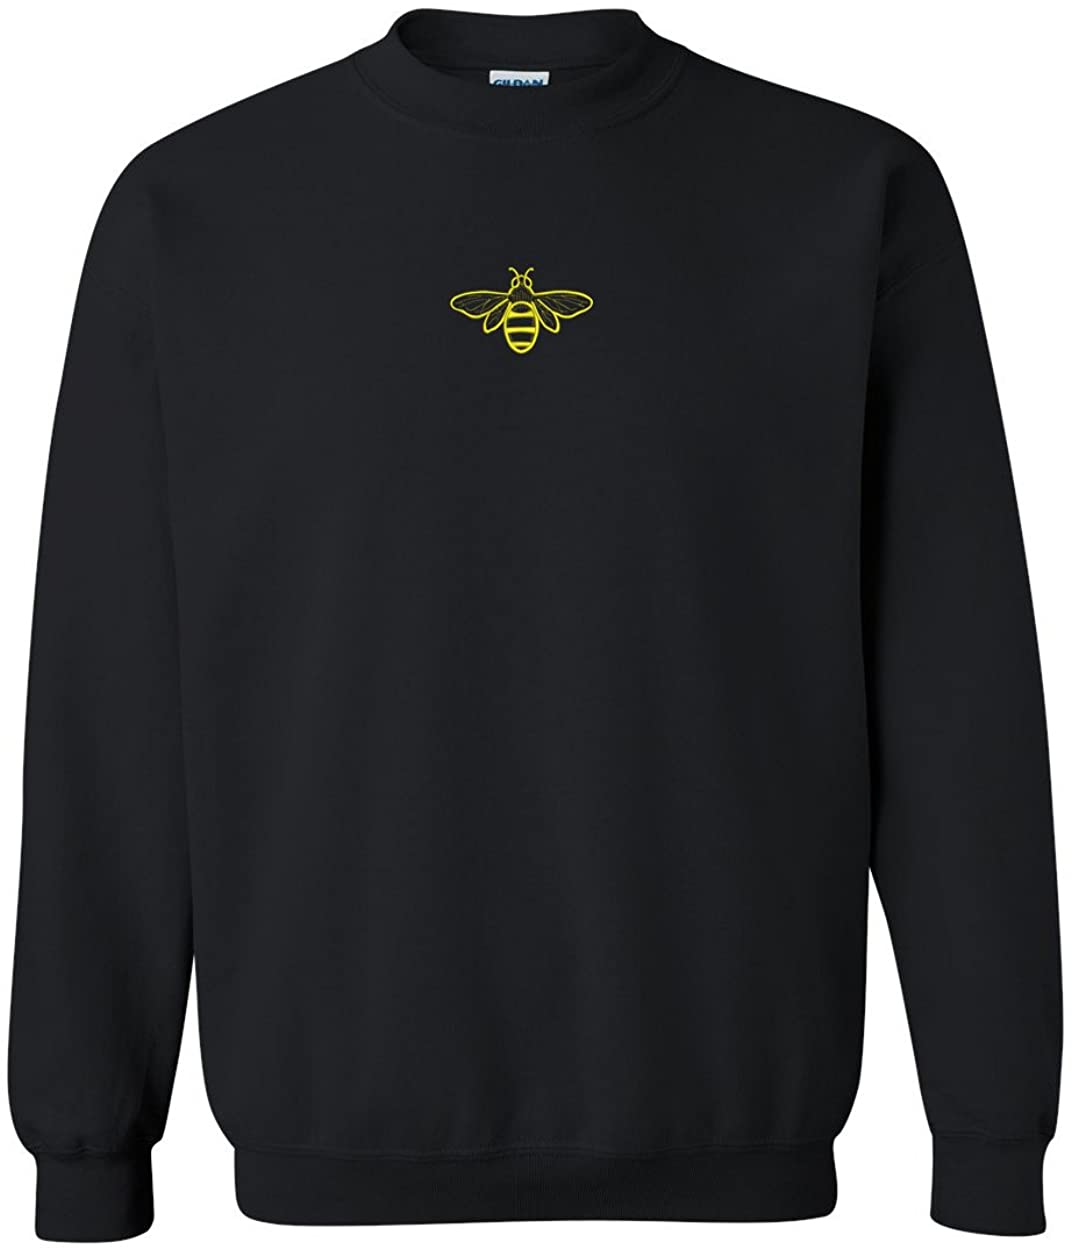 Trendy Apparel Shop Bee Embroidered Crewneck Sweatshirt - Black - 2XL